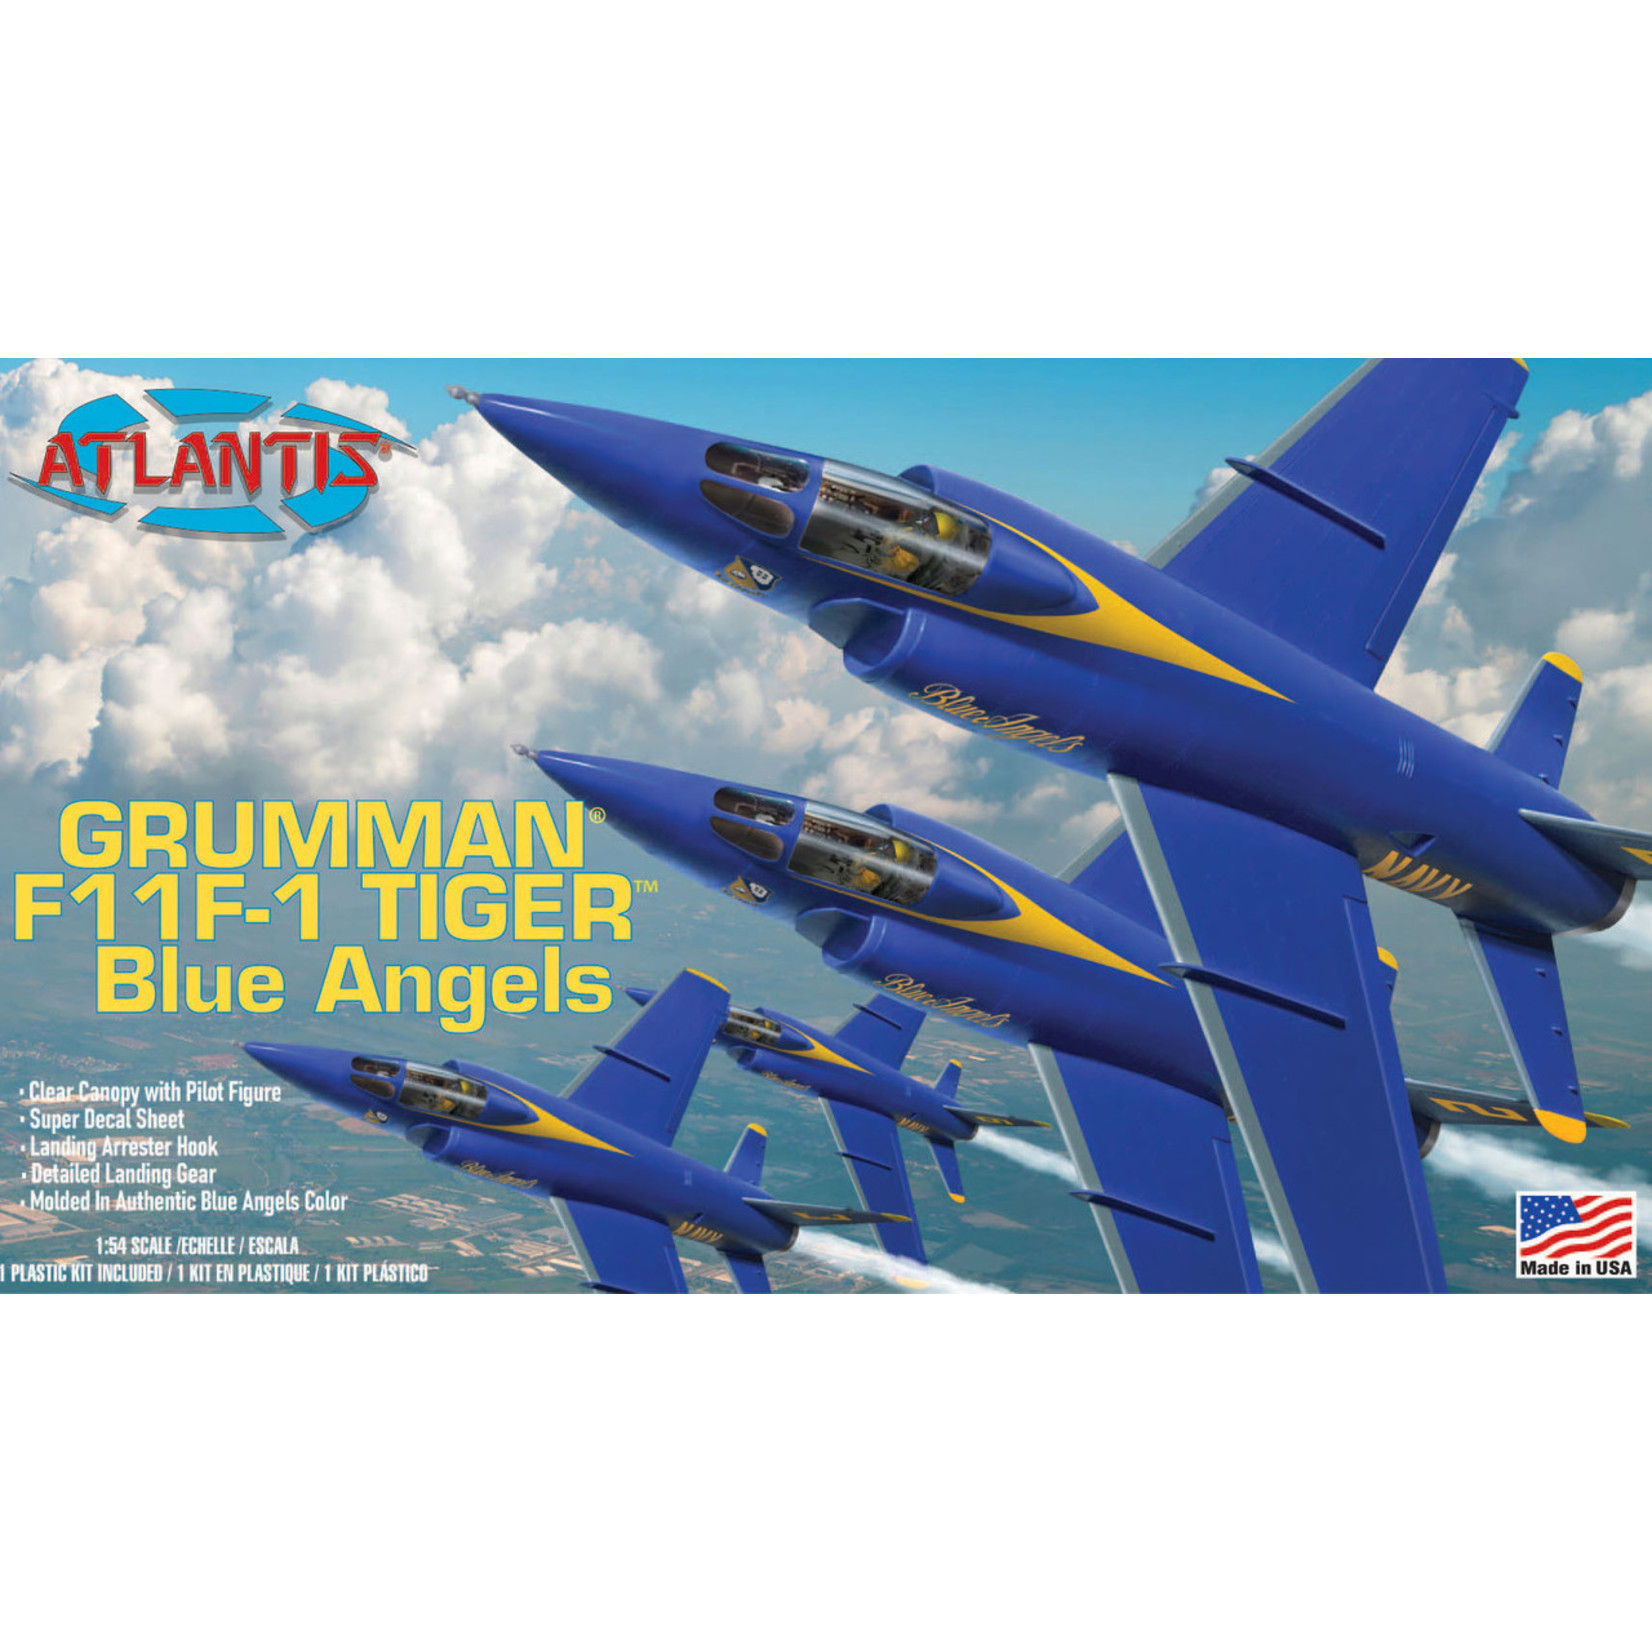 Atlantis Models AANH169 - 1/54 US NAVY Blue Angels Grumman F11F-1 Tiger Plastic